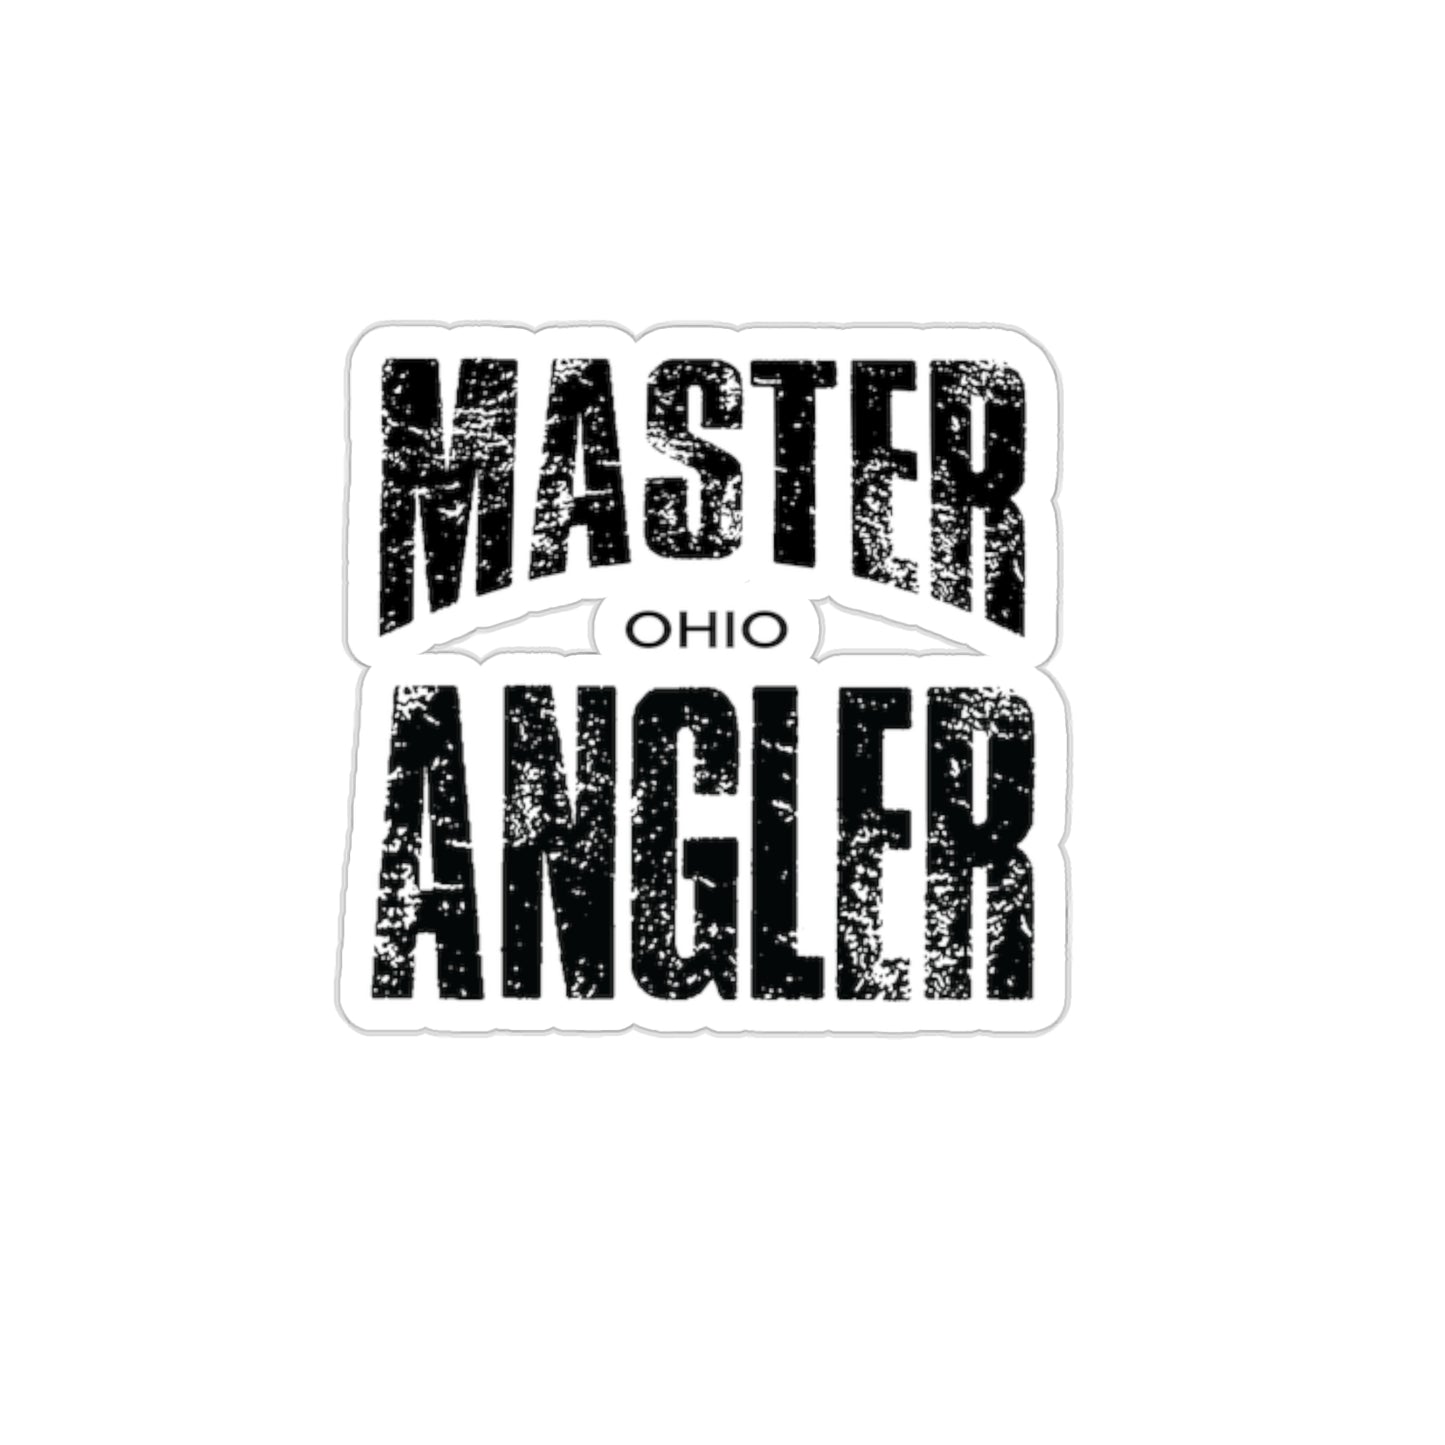 Ohio Master Angler Sticker - BLACK